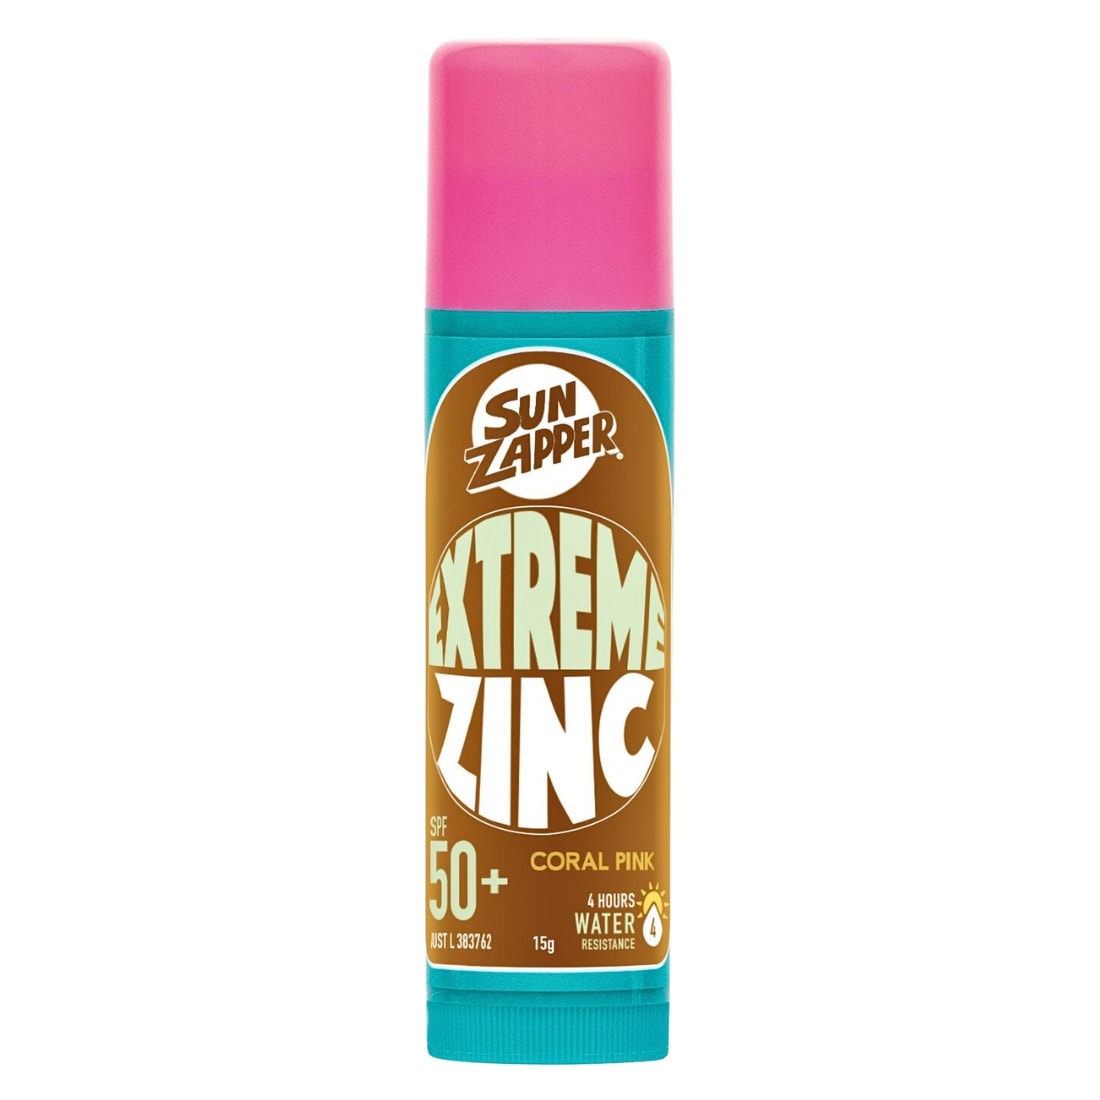 Sun Zapper Extreme Zinc SPF50+ Face Stick - Coral Pink